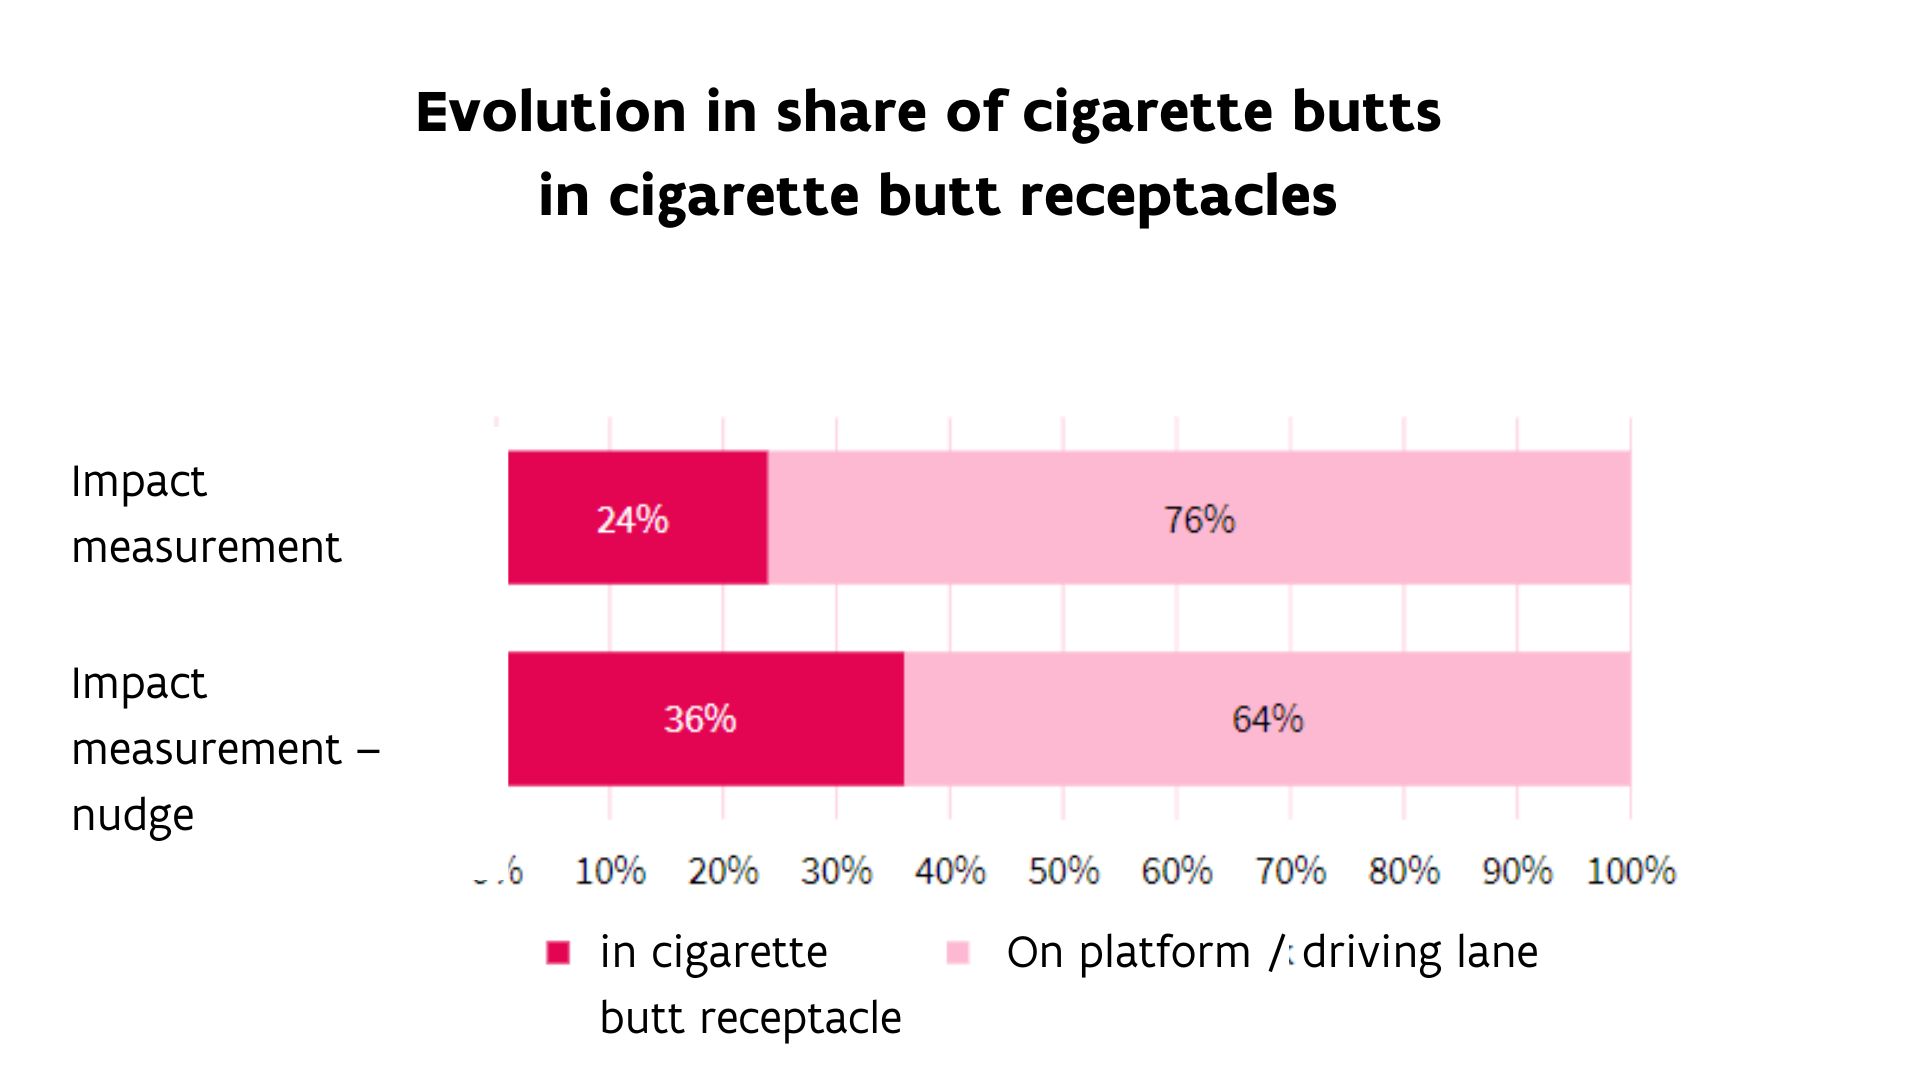 Evolution in share of cigarette butts in cigarette butt receptacles